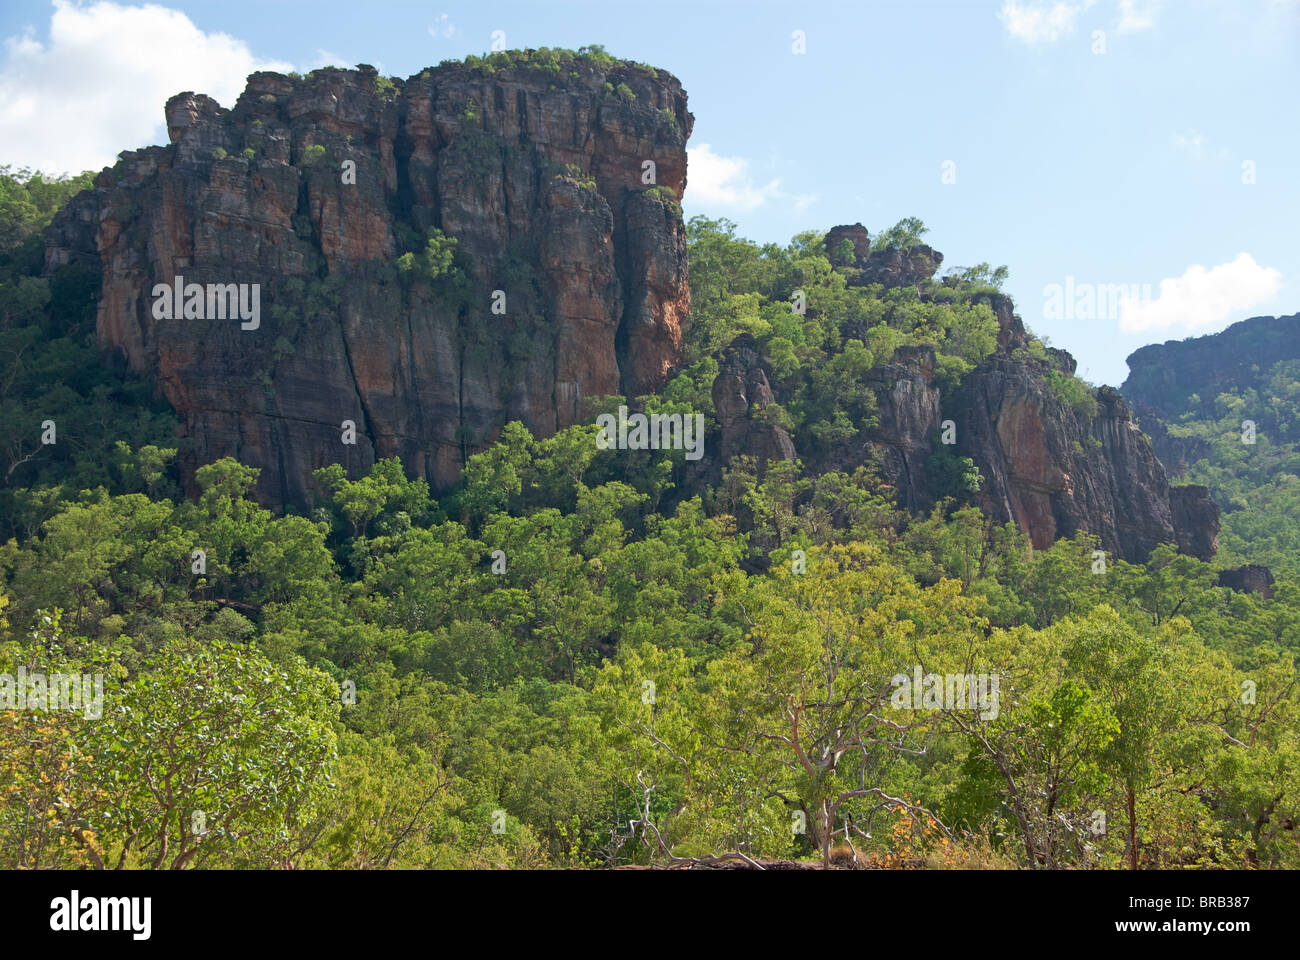 Sperone di roccia a Nourlangie (Burrunggui) nel Parco Nazionale Kakadu, Territorio del Nord, l'Australia. Foto Stock